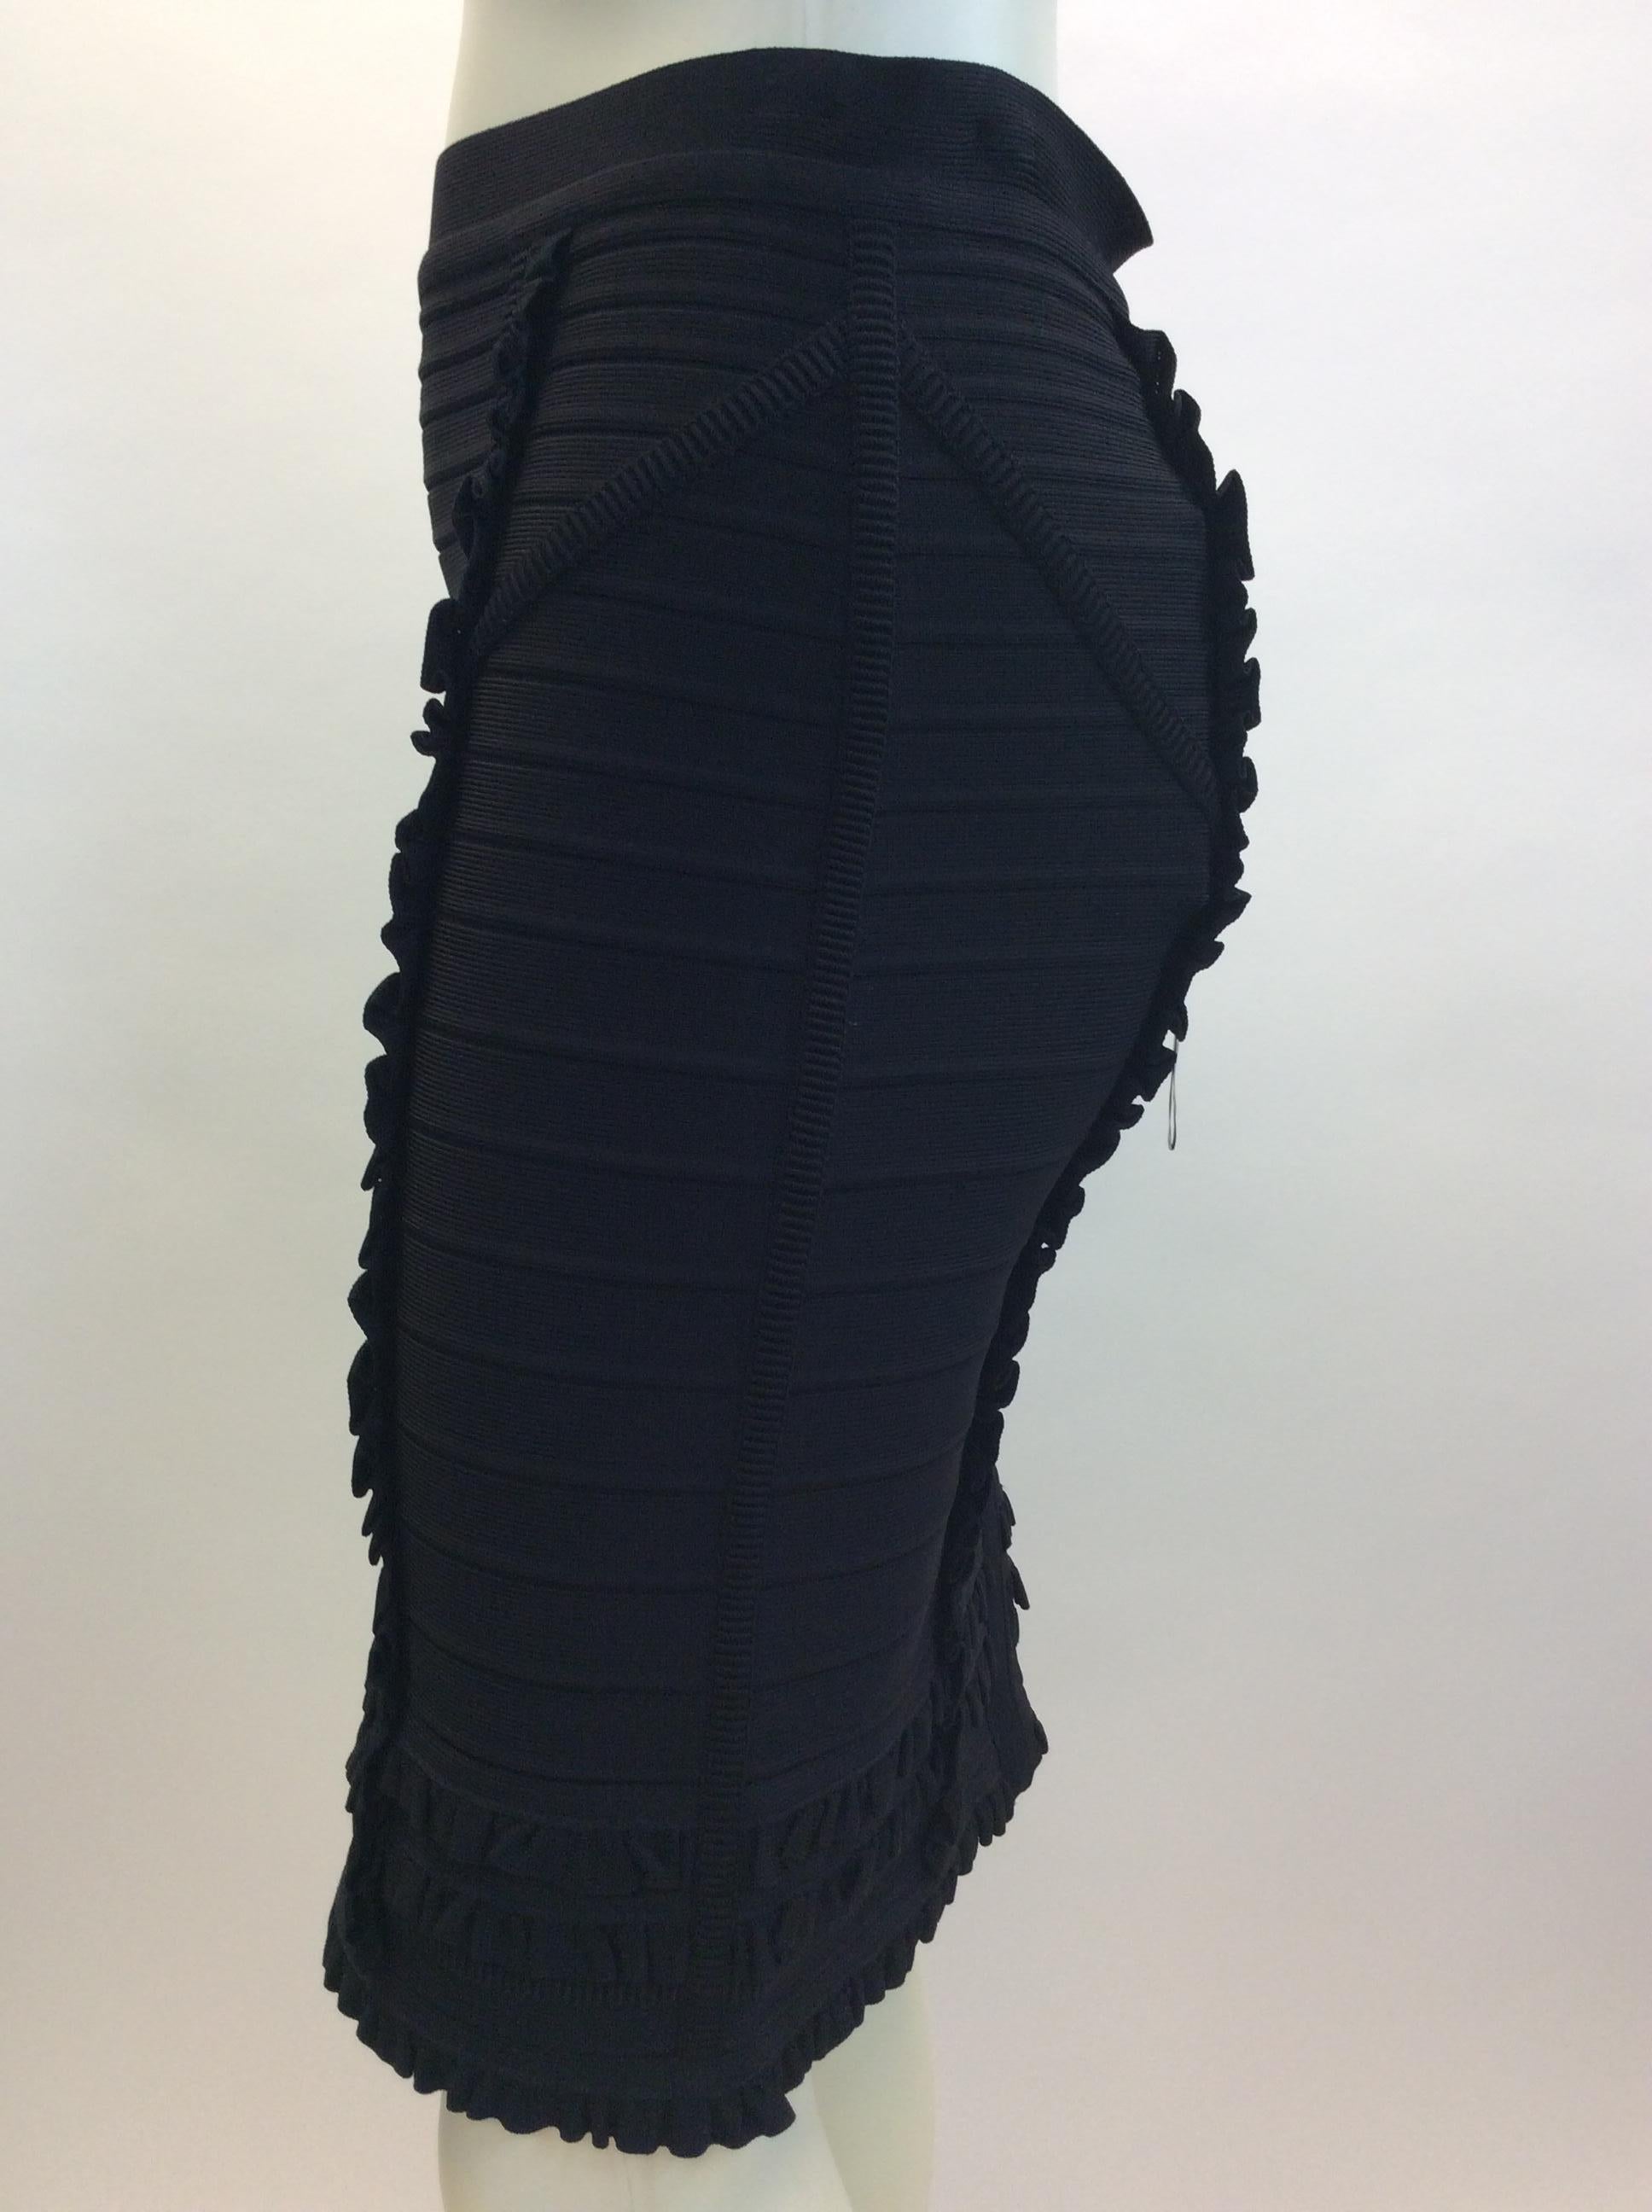 Herve Leger Black Ruffle Skirt NWT
$499
Made in China
90% Rayon, 9% Nylon, 1% Spandex
Size Medium
Length 19